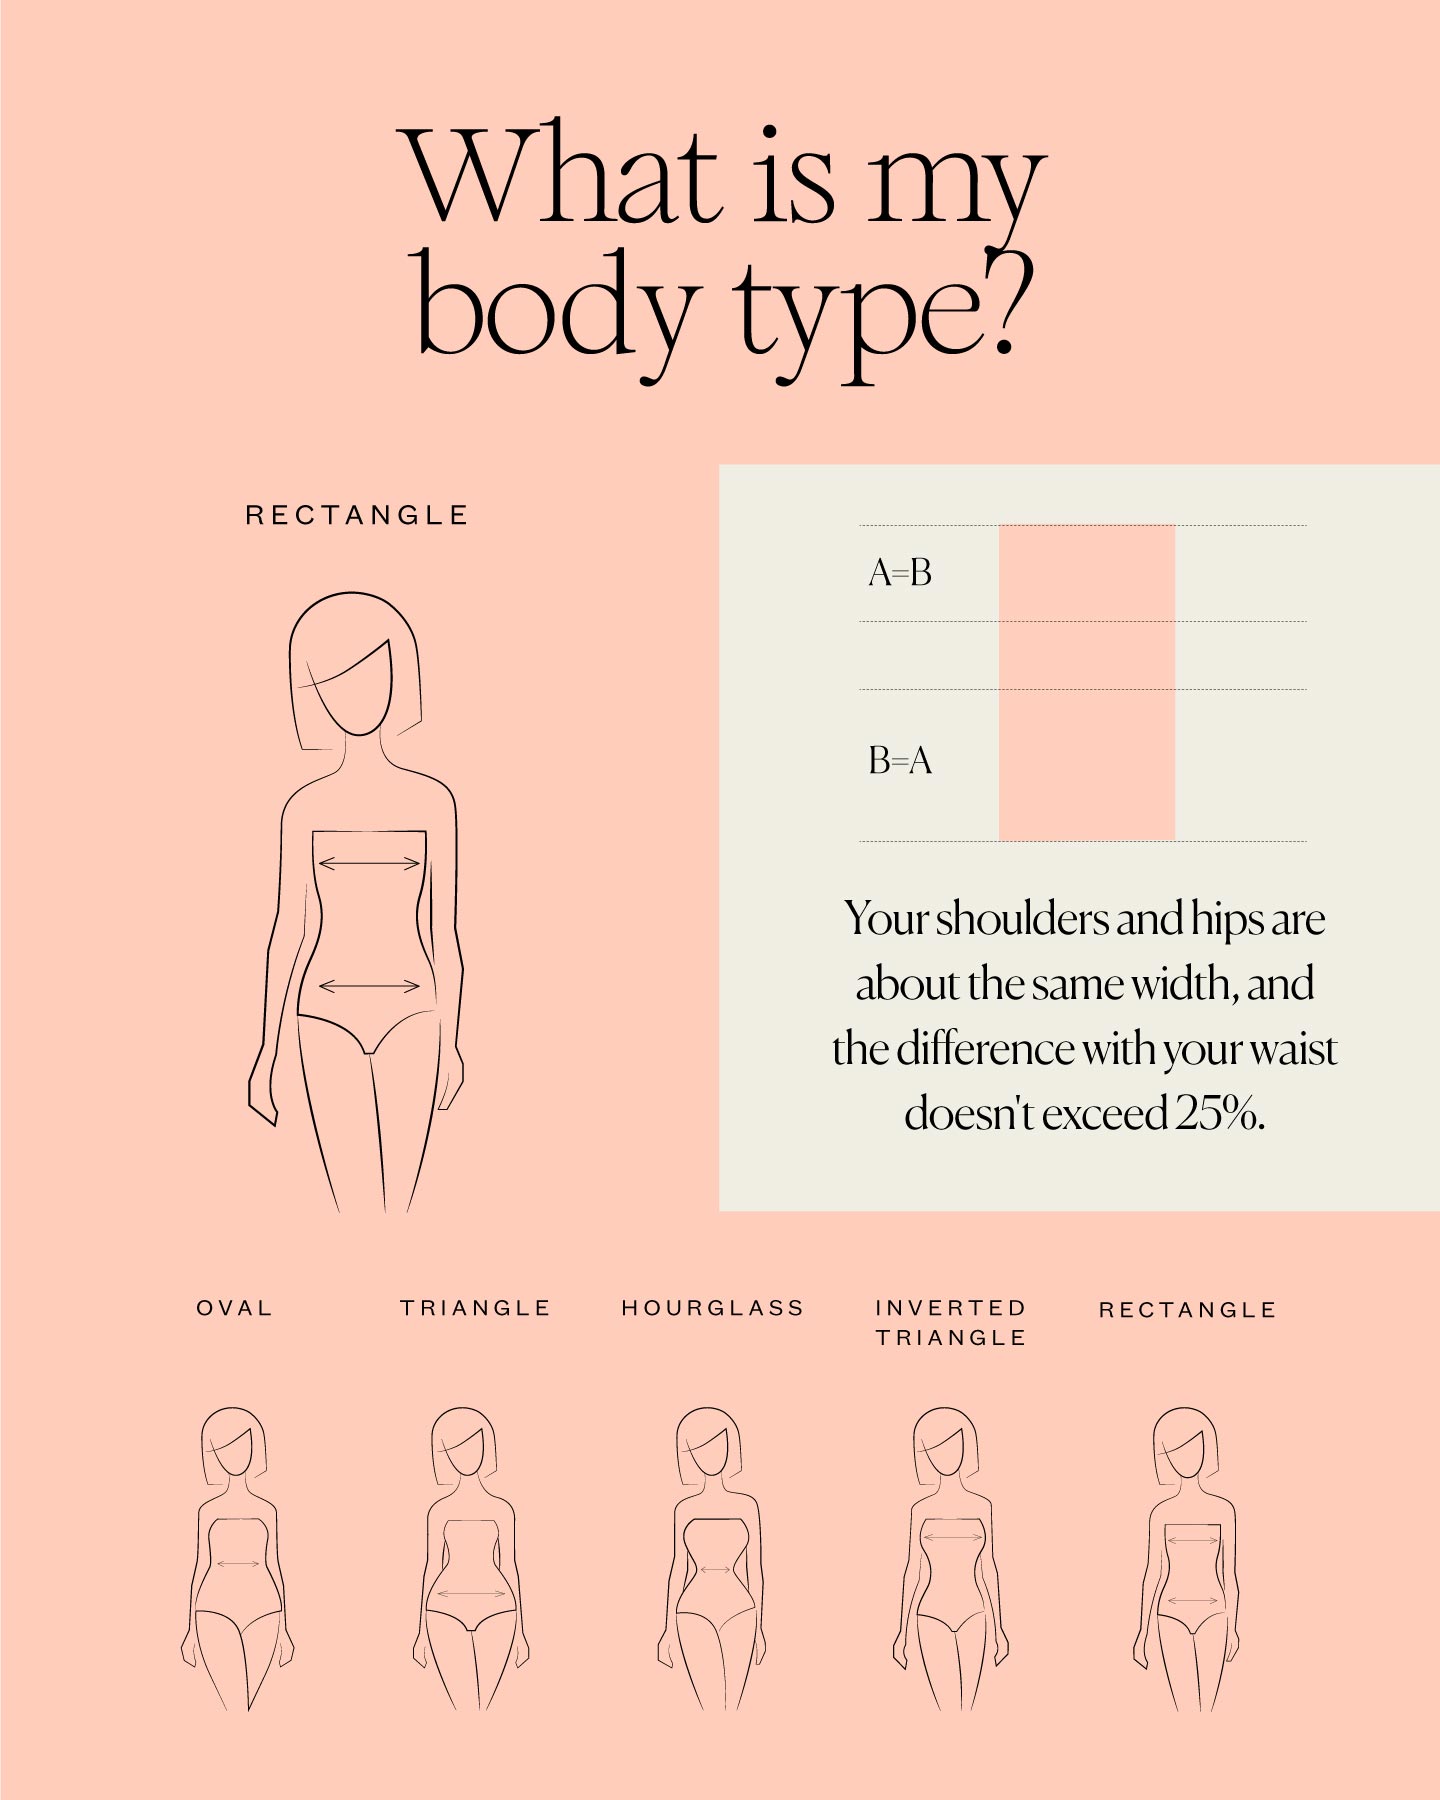 How to dress a rectangle body shape